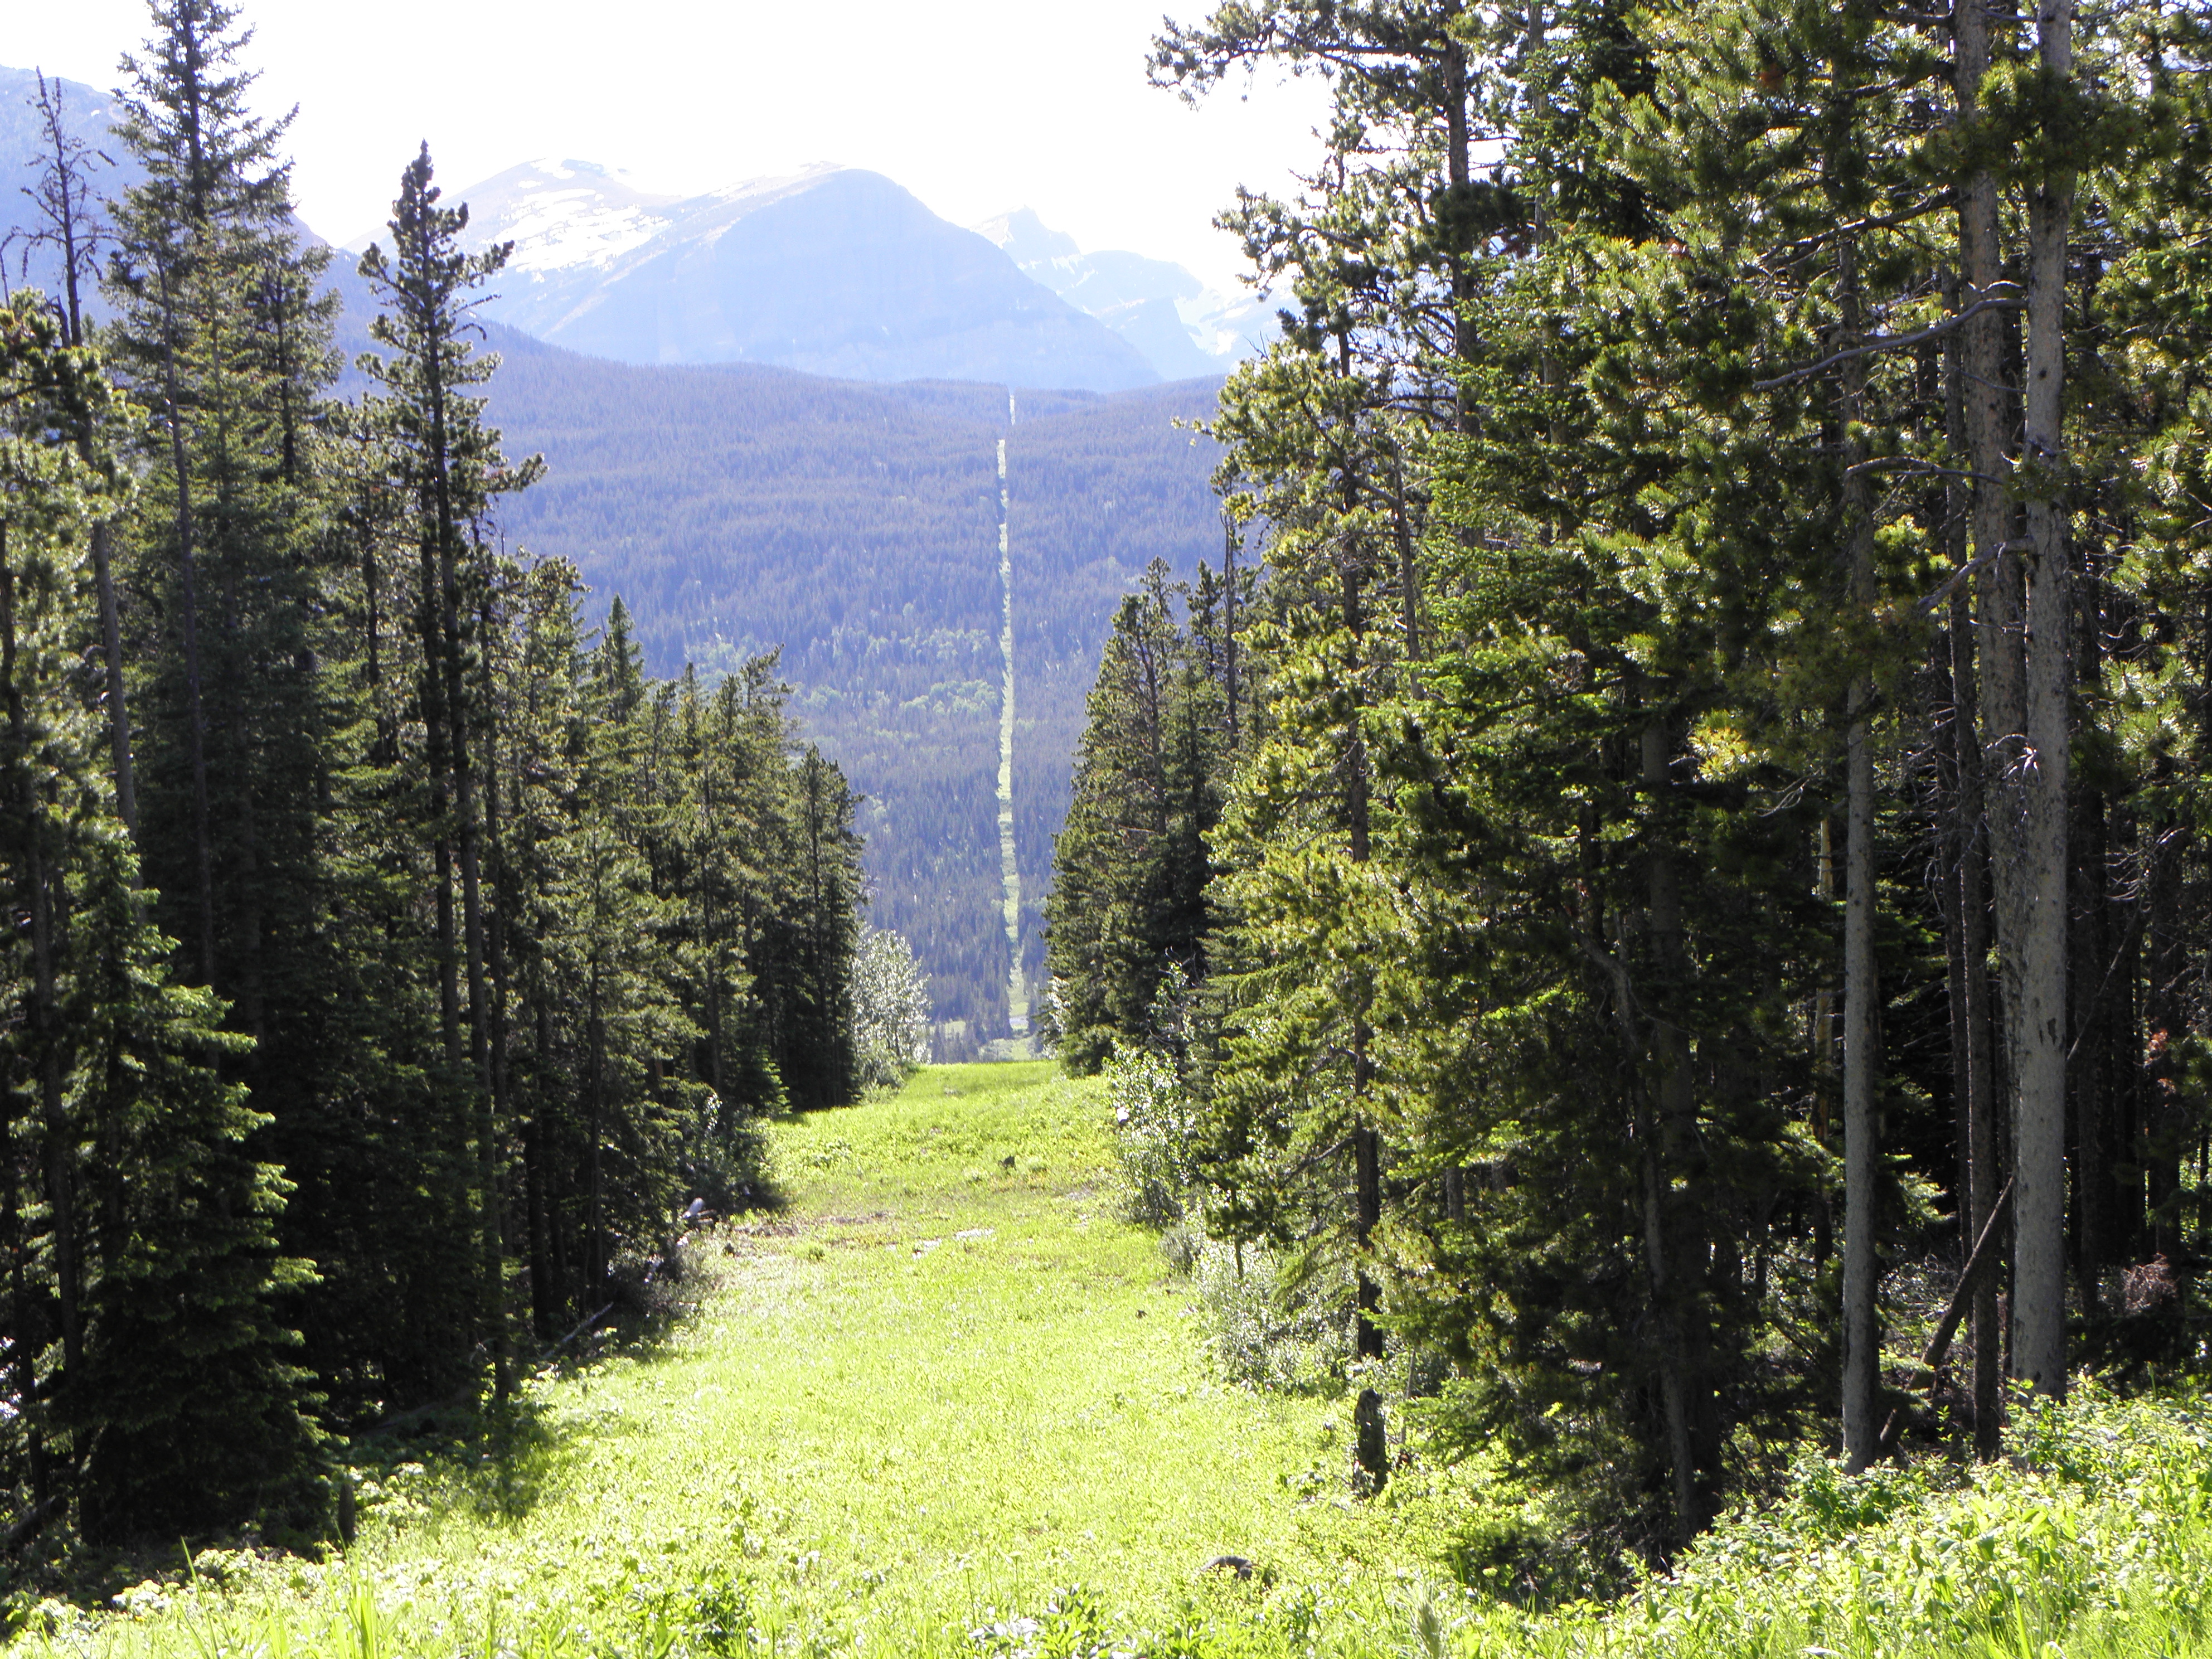 Государственная граница канады. Фронтир США лес. Граница США И Канады в лесу. Граница между США И Канадой фото. Канадские леса.